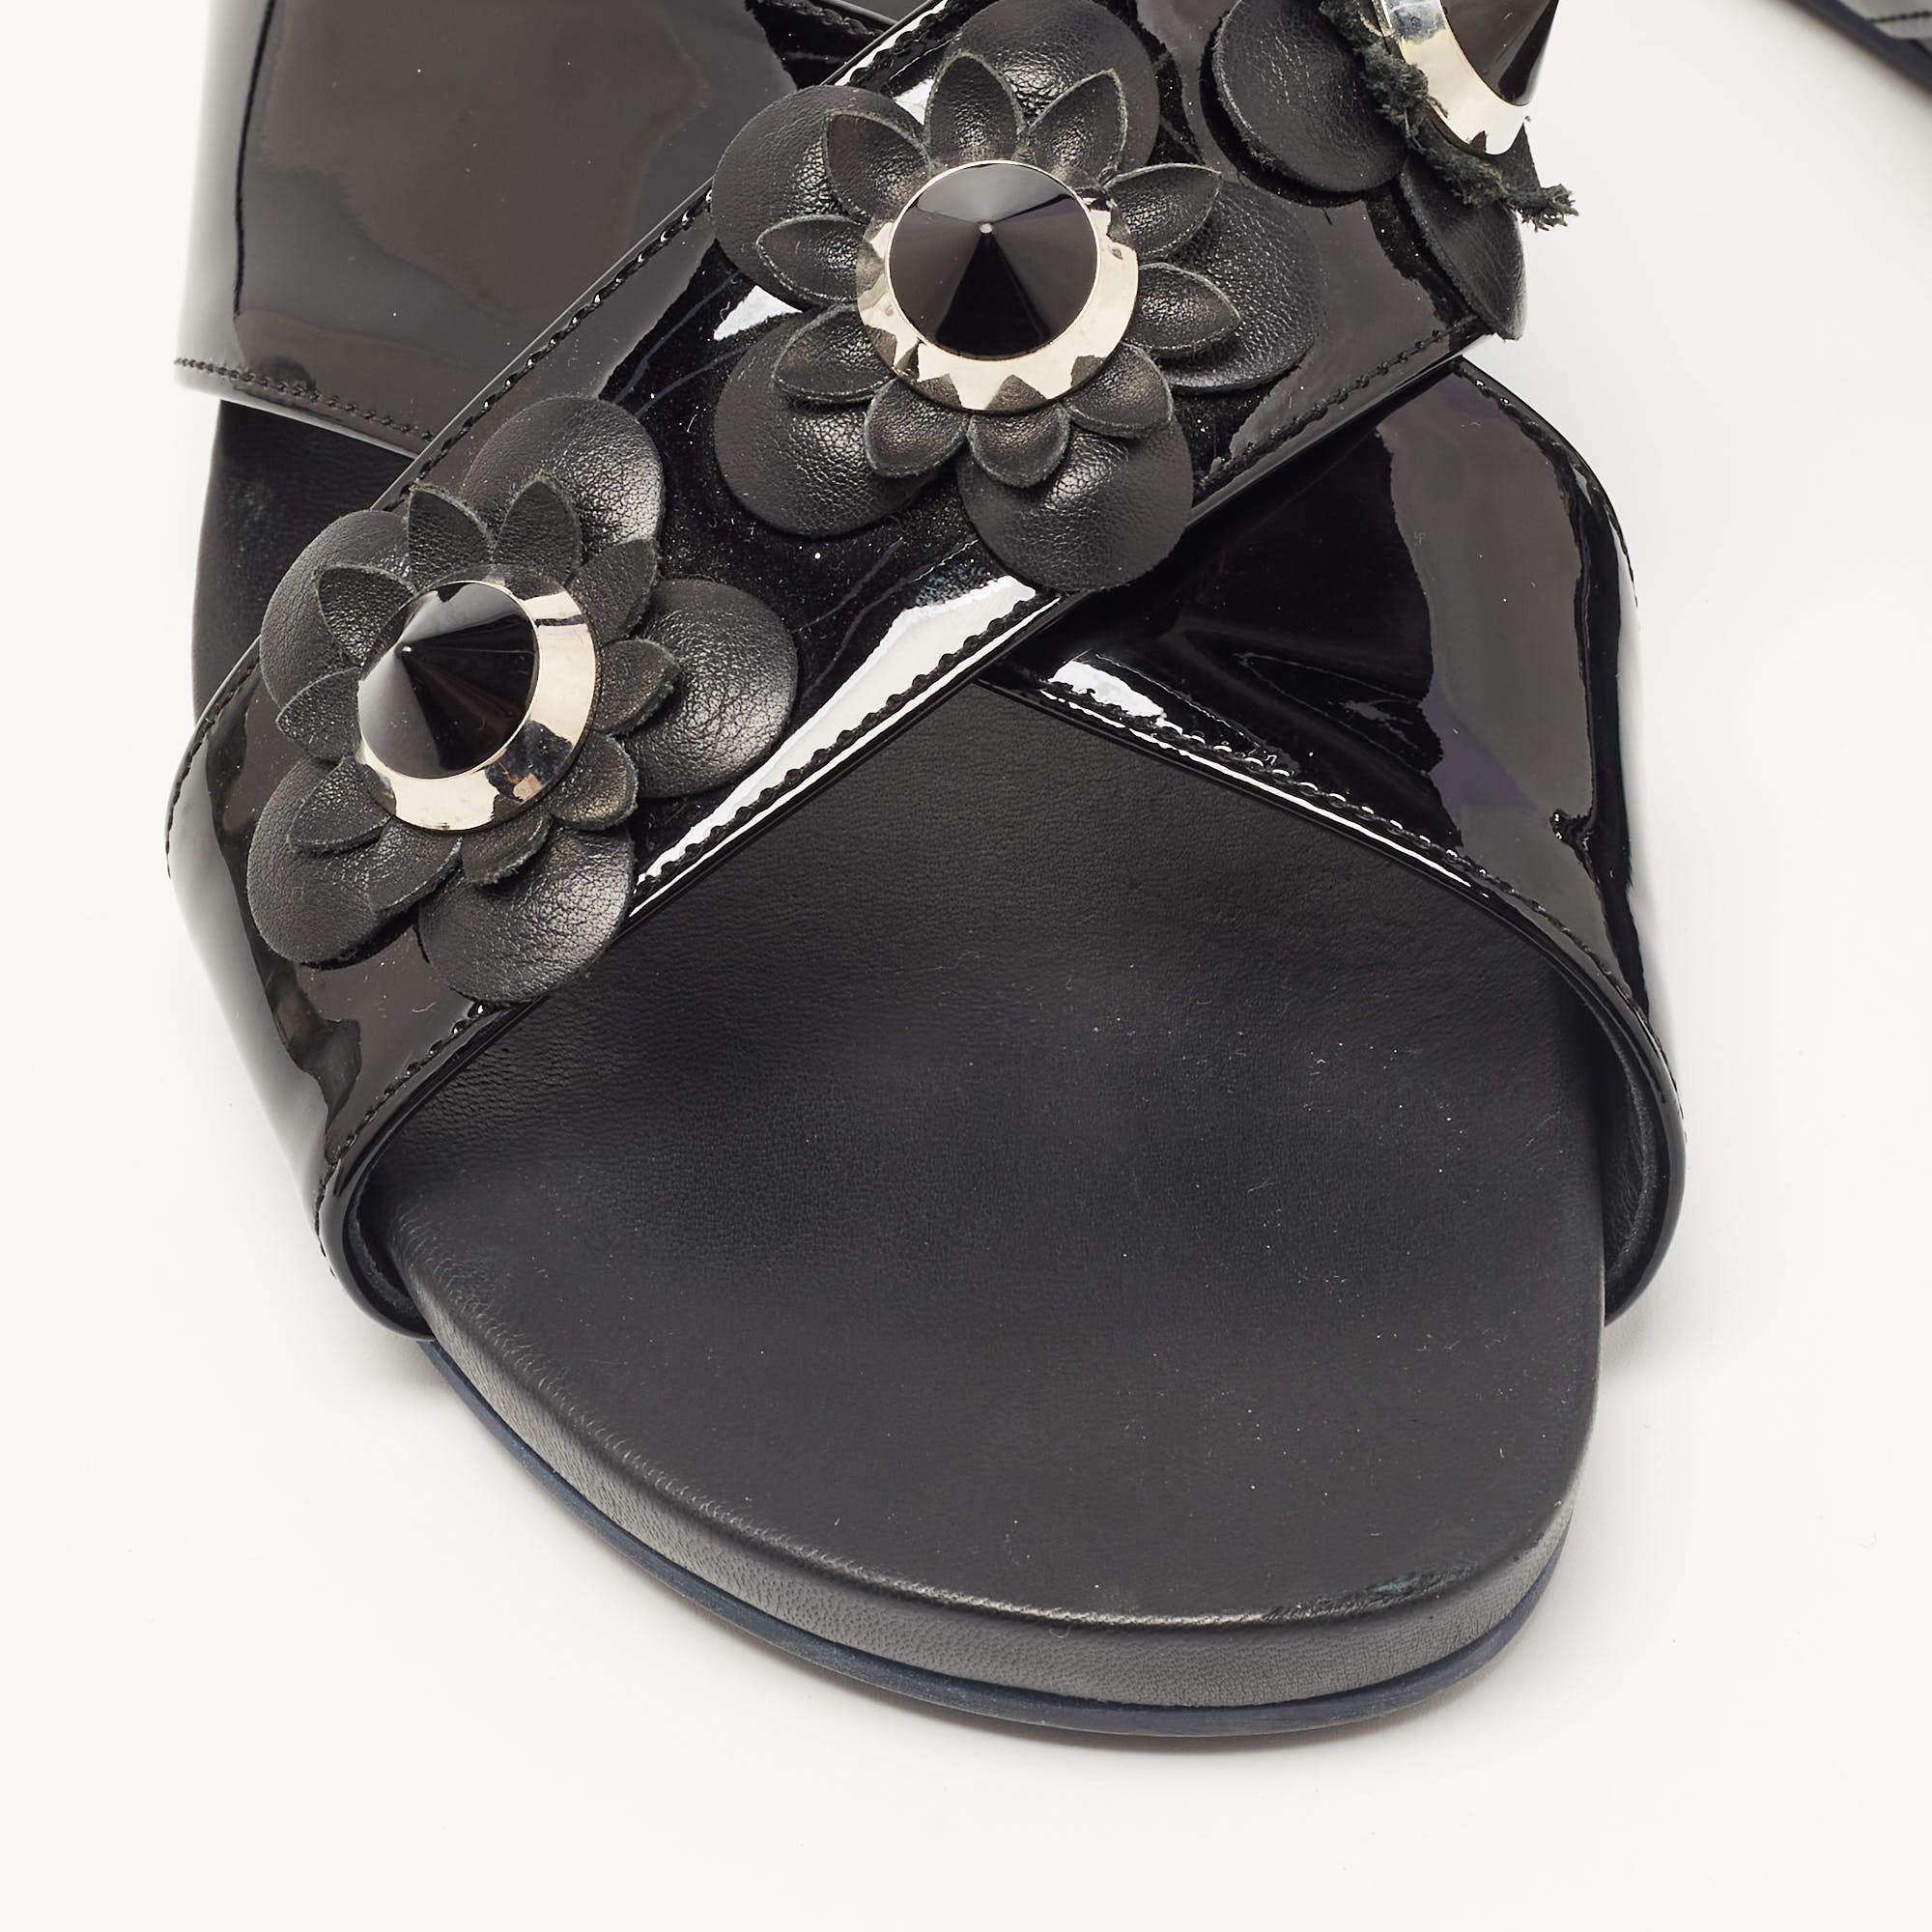 Fendi Black Patent Leather Flowerland Stud Criss Cross Flat Sandals Size 41 2